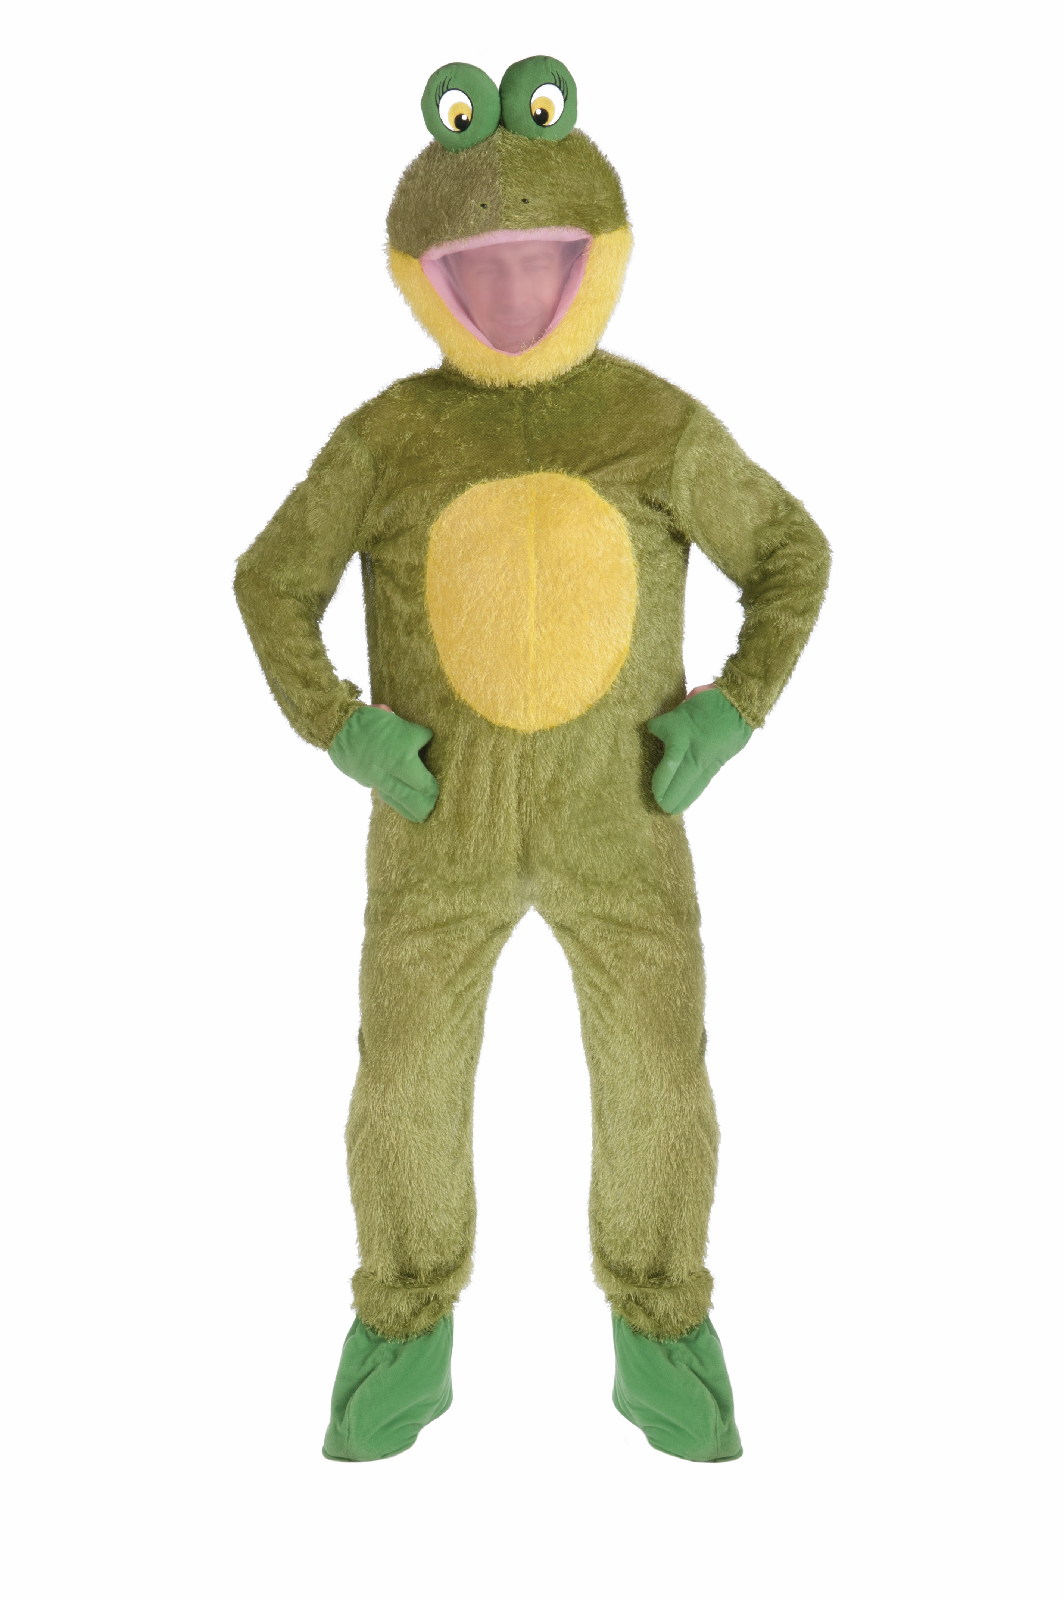 Plush Furry Green Frog Kermit Adult Standard Size Mascot Suit Costume